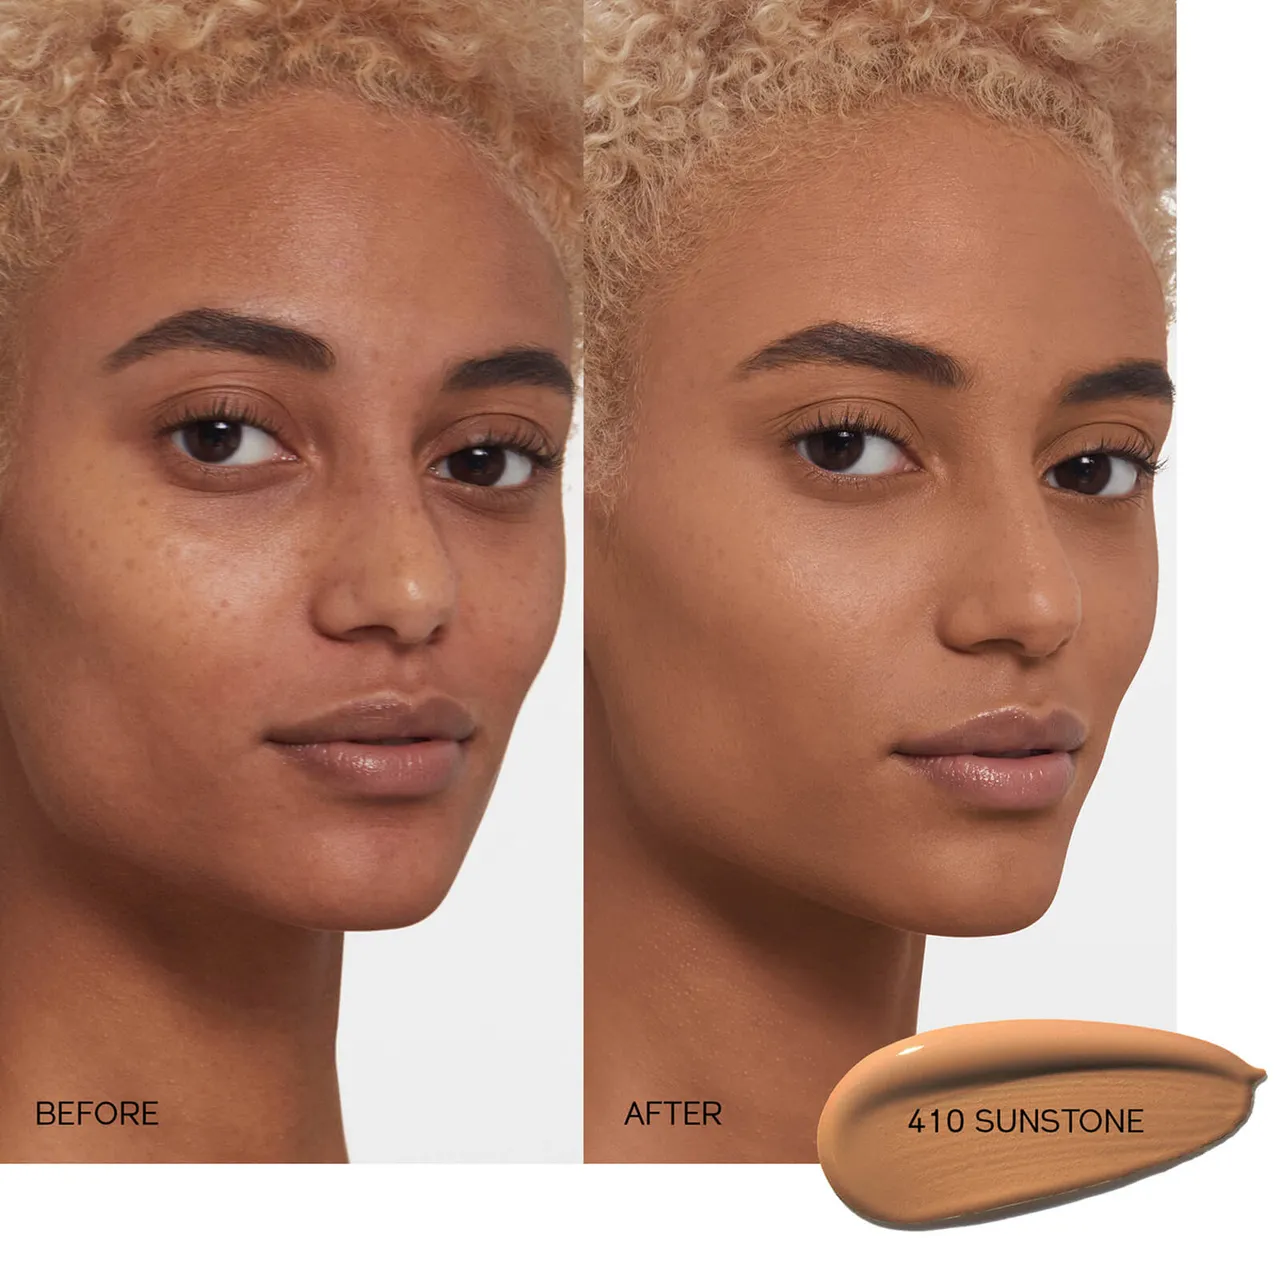 Shiseido Synchro Skin Self Refreshing Foundation 30ml (Various Shades) - 410